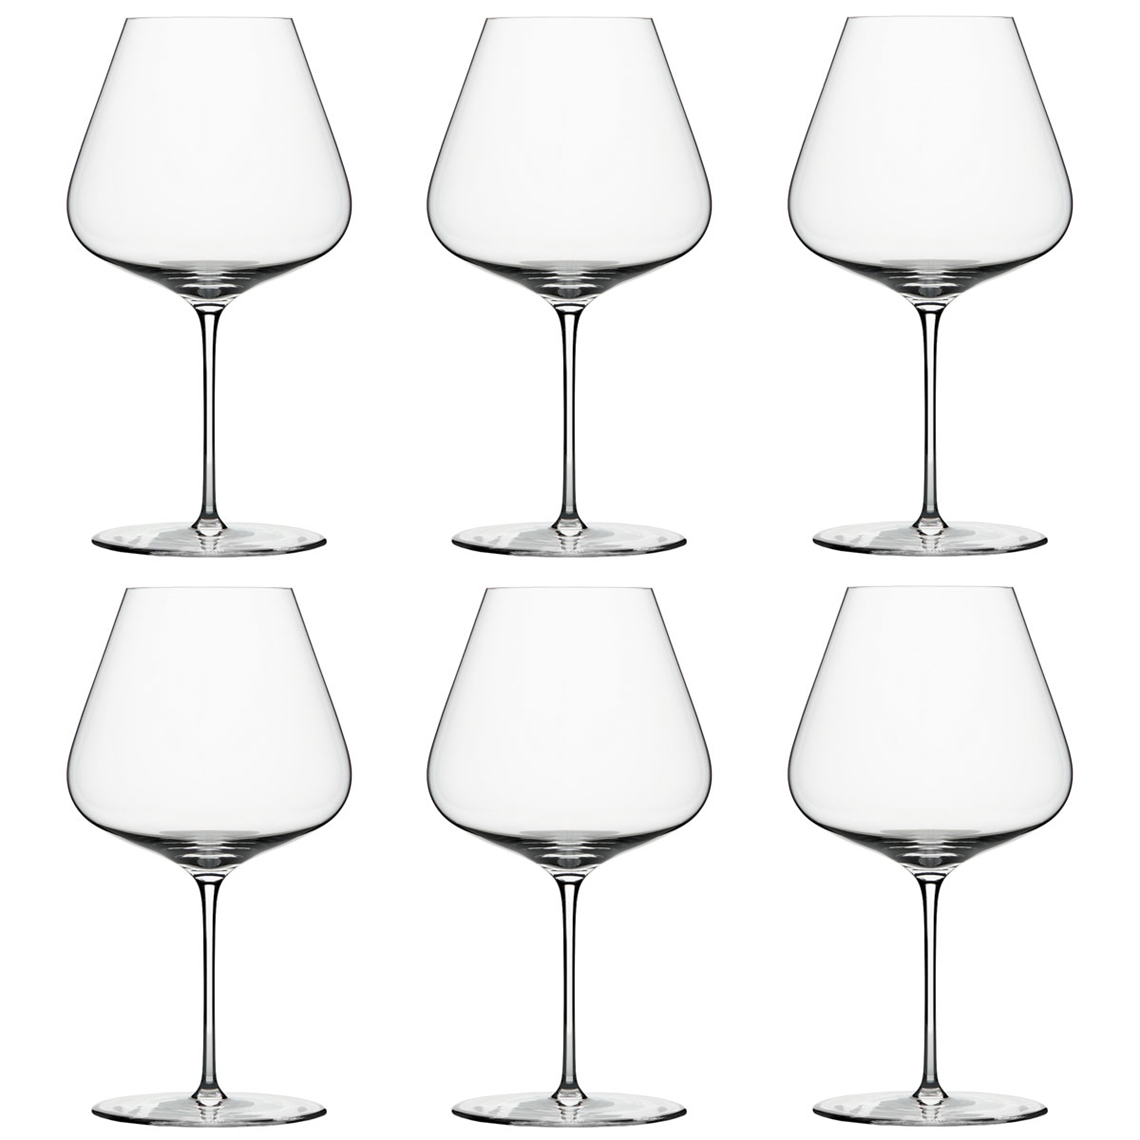 Zalto Denk Art Burgundy Wine Glass - Set of 6